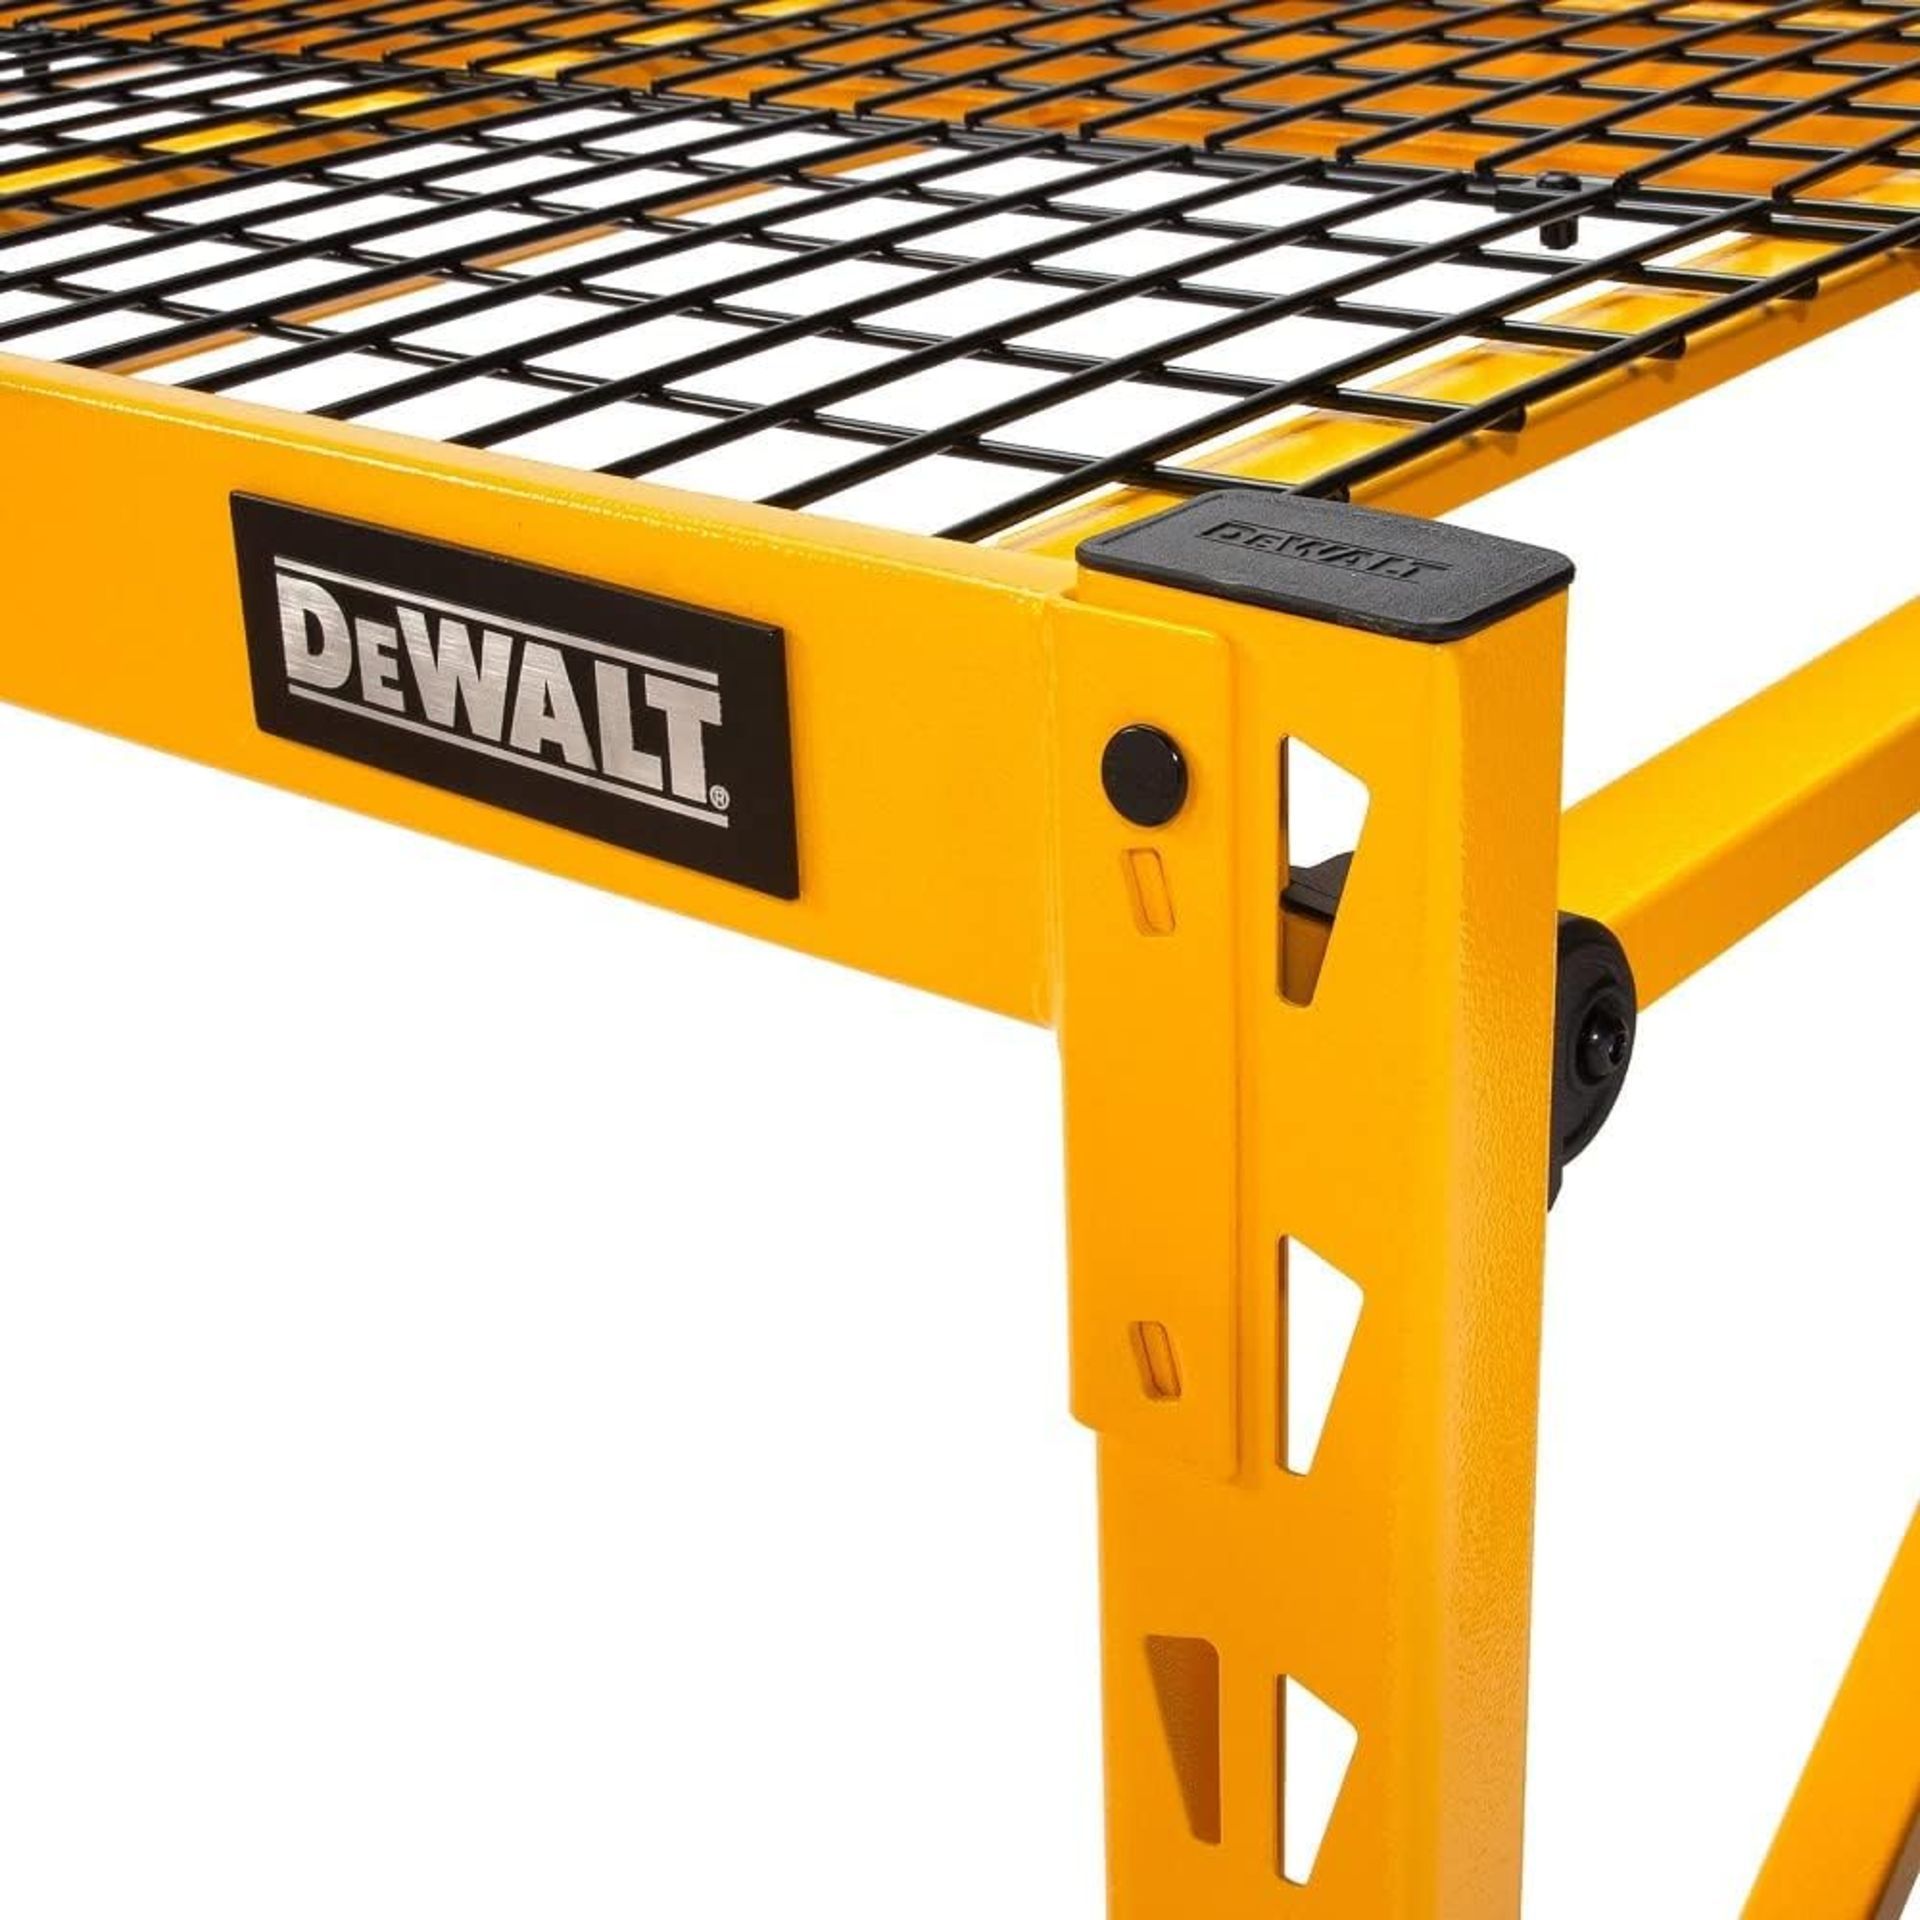 Brand New DEWALT DXST10000EXT - INDUSTRIAL RACK EXTENDER KIT, yellow, Industrial rack extension - - Image 3 of 3